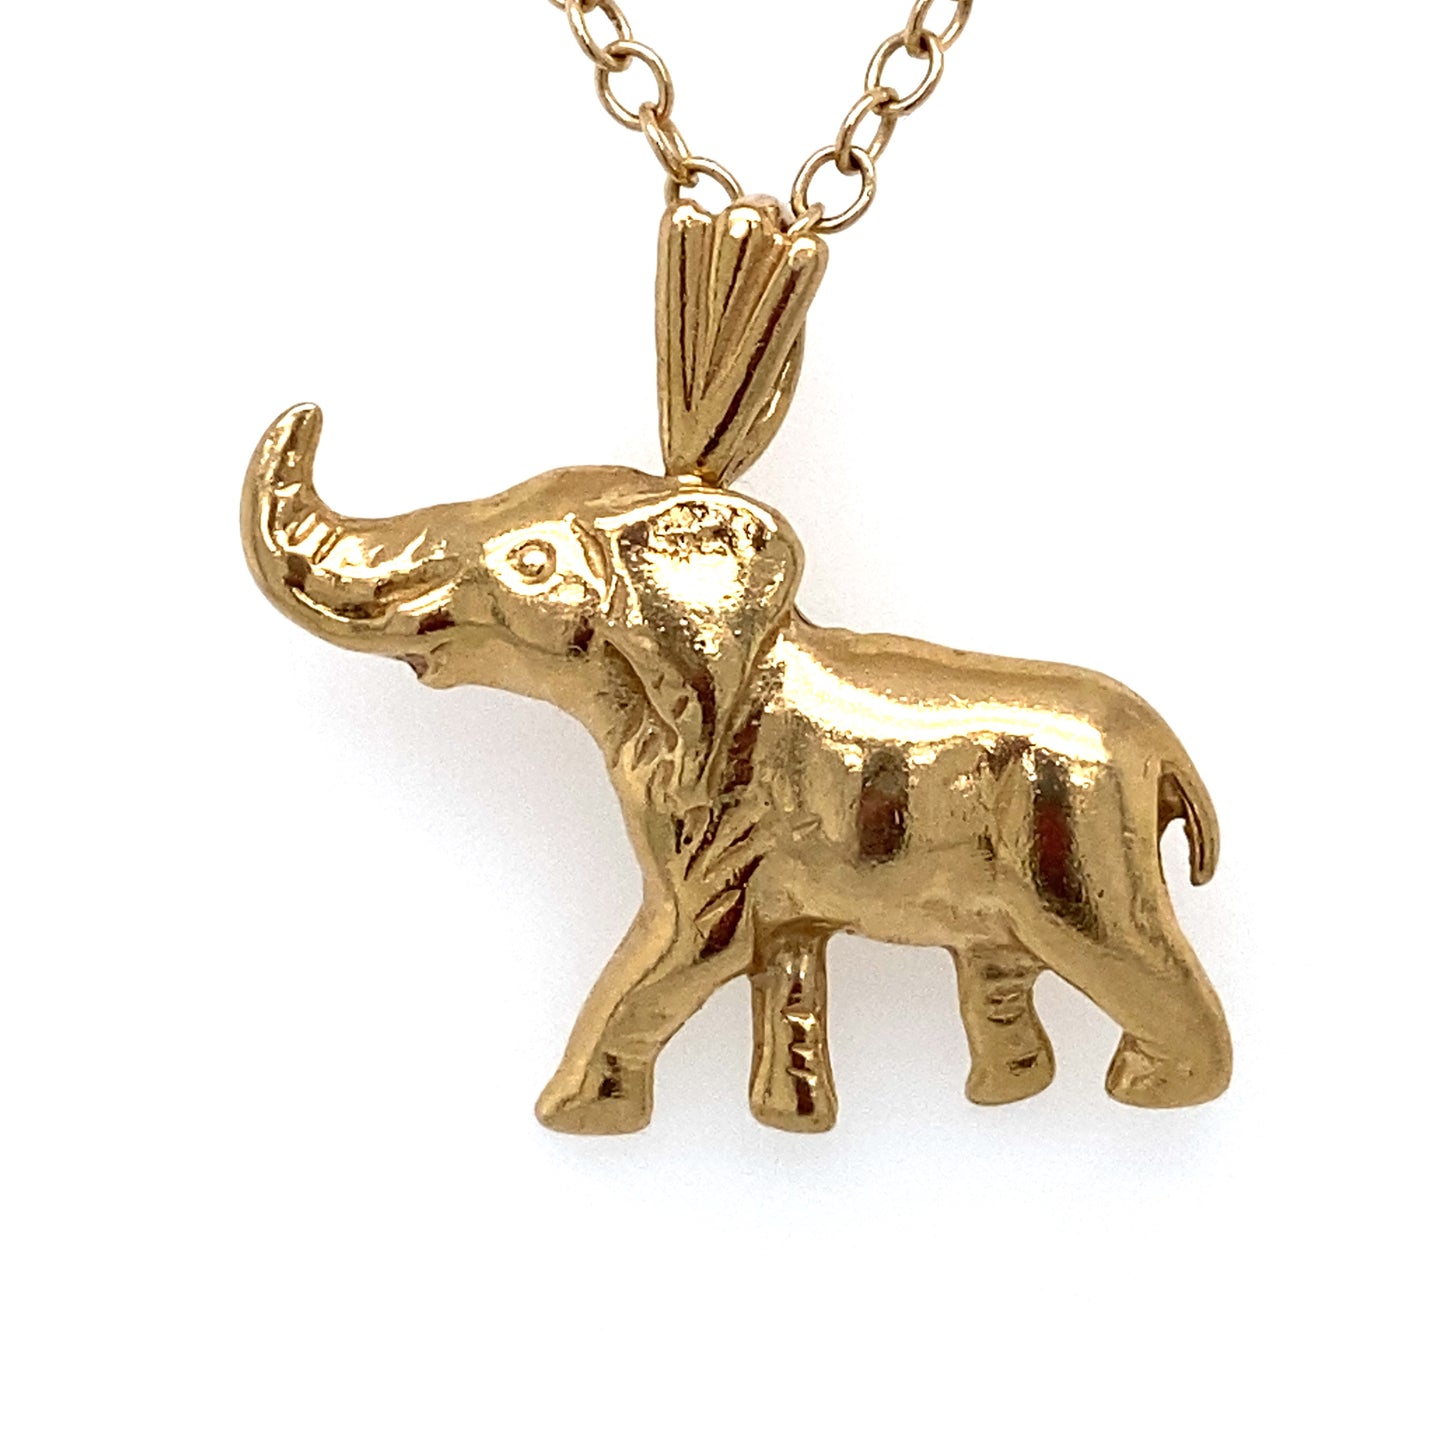 Circa 1950s Elephant Animal Pendant in 14K Gold